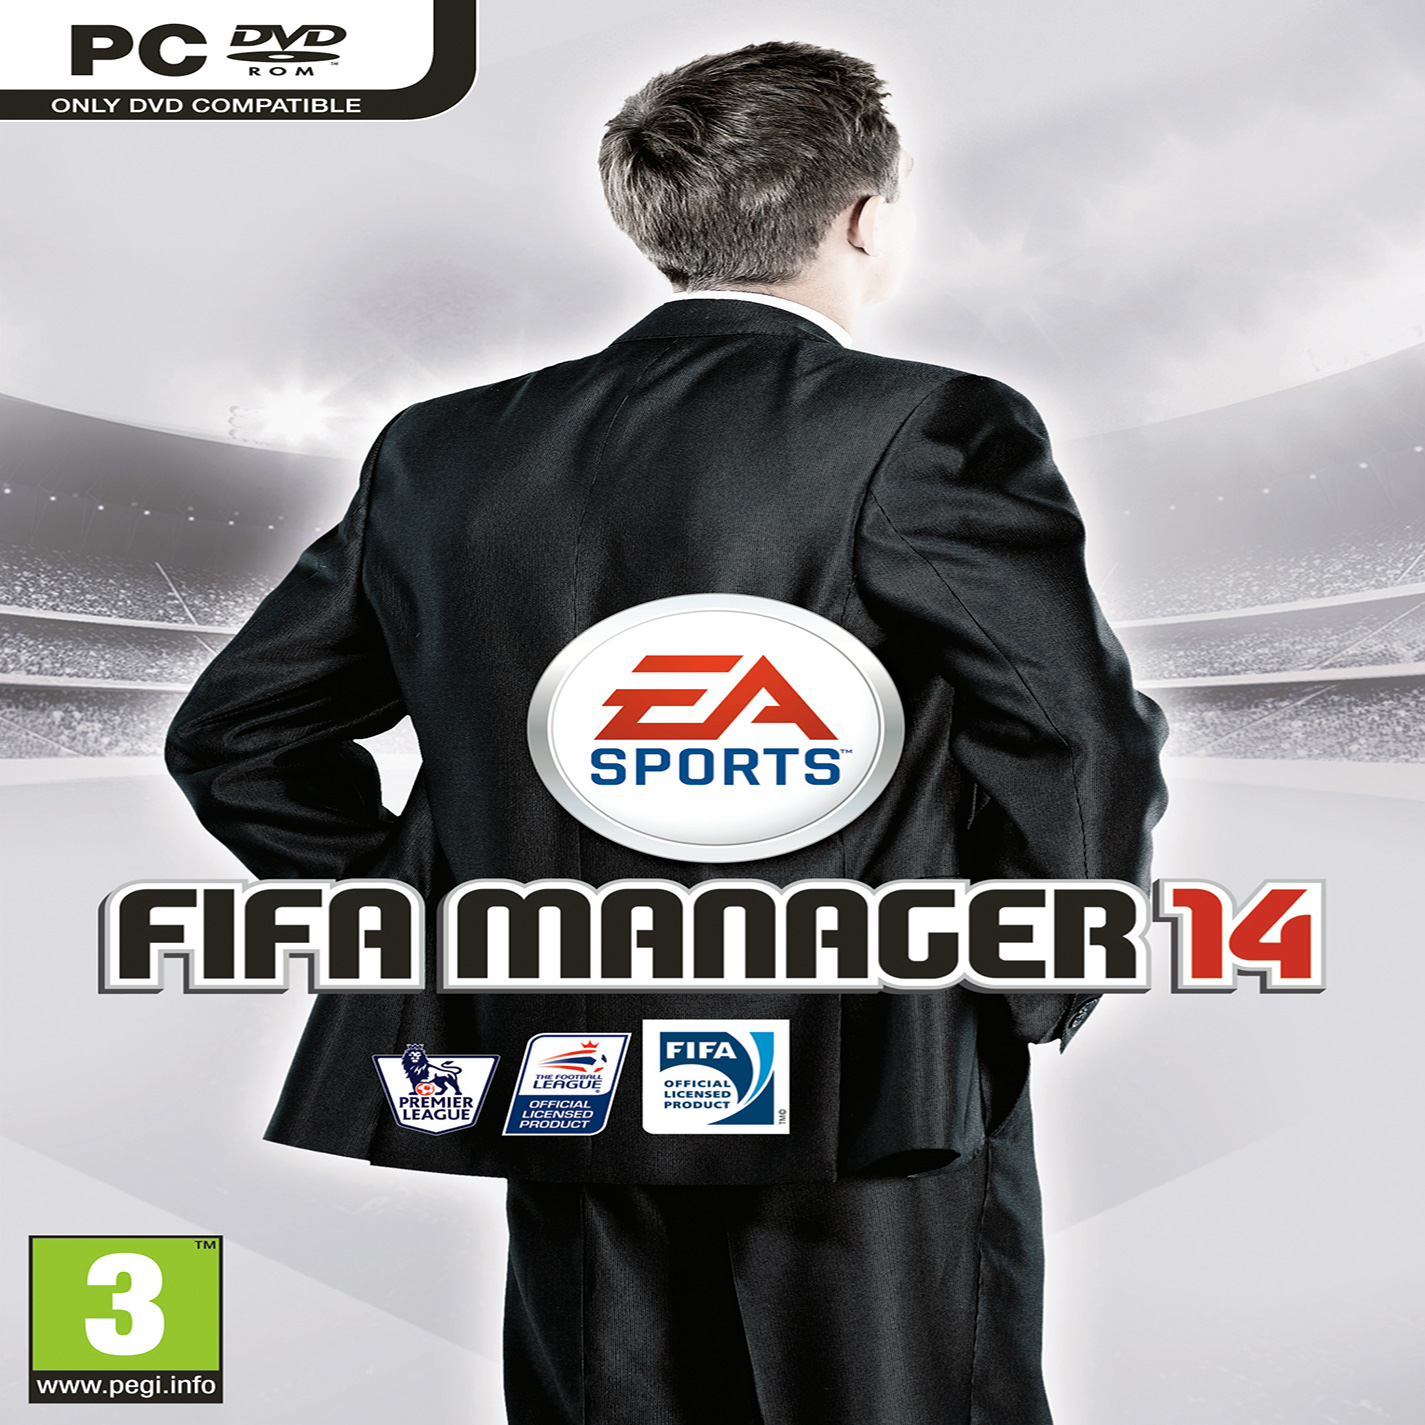 FIFA Manager 14 - pedn CD obal